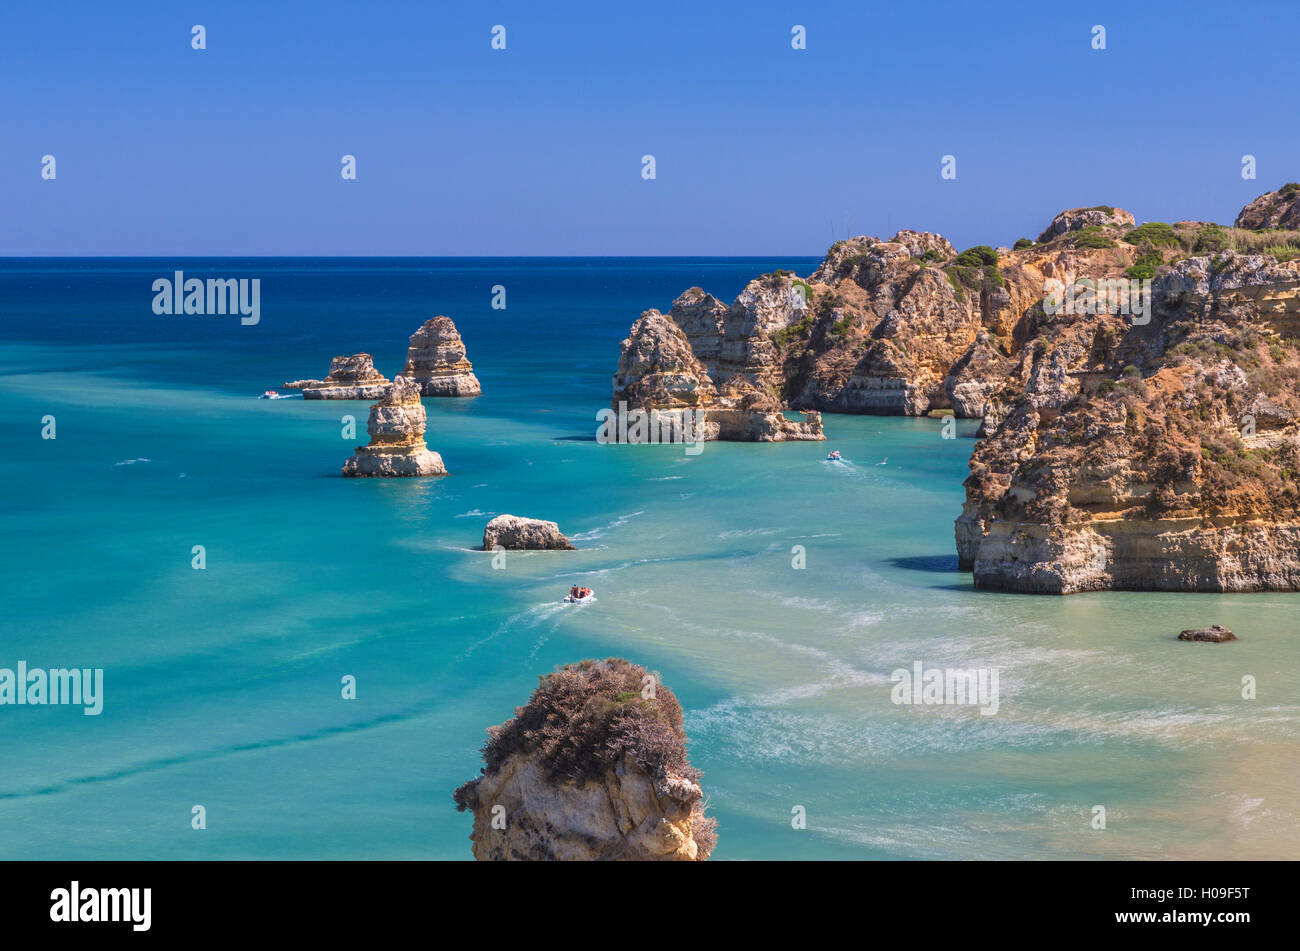 The turquoise water of the Atlantic Ocean and cliffs surrounding Praia Dona Ana beach, Lagos, Algarve, Portugal, Europe Stock Photo